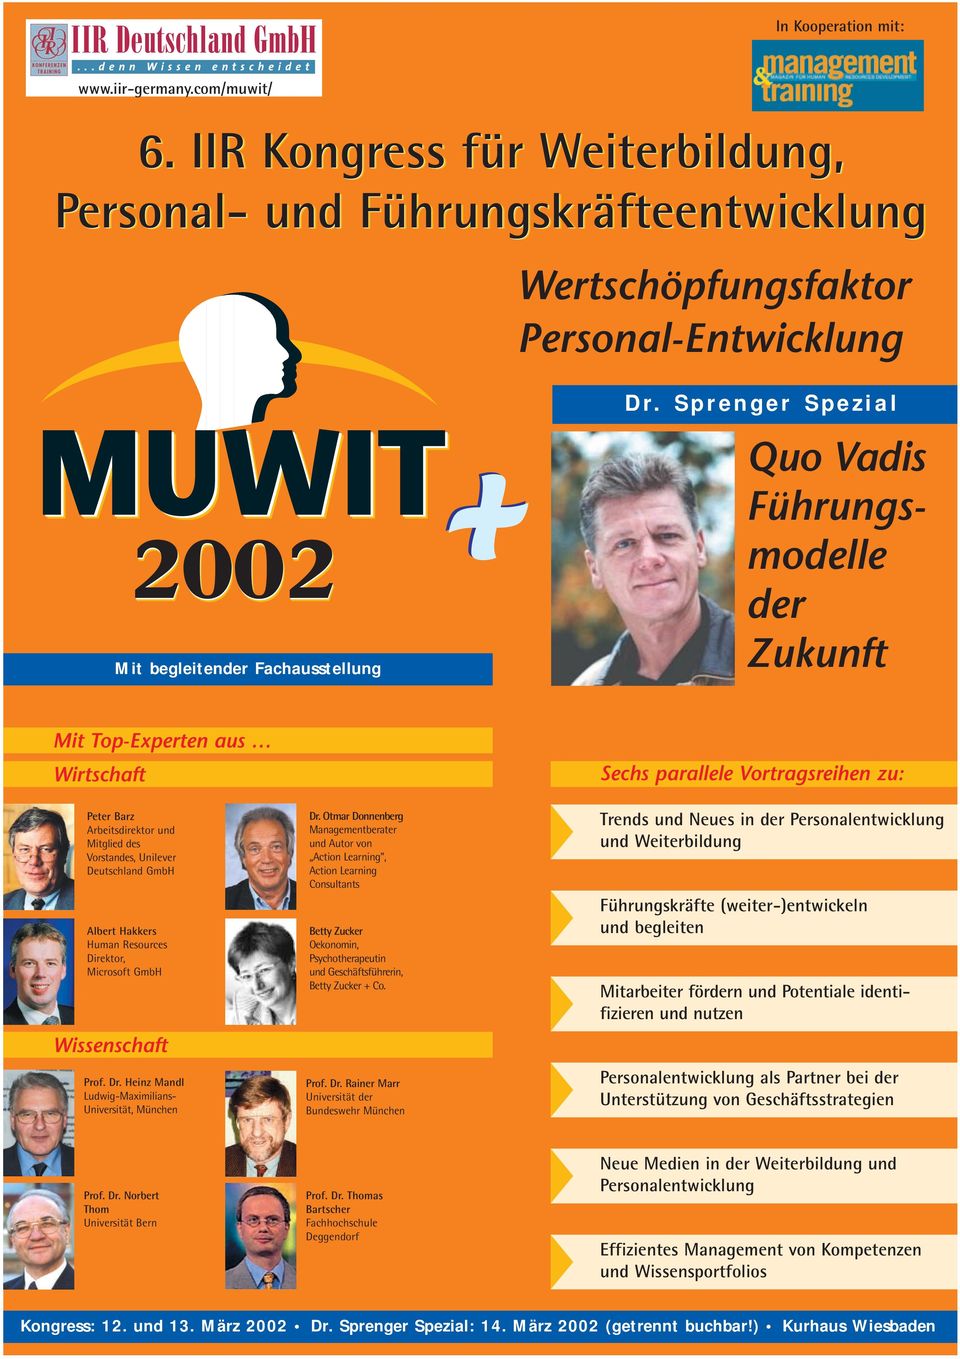 GmbH Albert Hakkers Human Resources Direktor, Microsoft GmbH Wissenschaft Prof. Dr. Heinz Mandl Ludwig-Maximilians- Universität, München Dr.